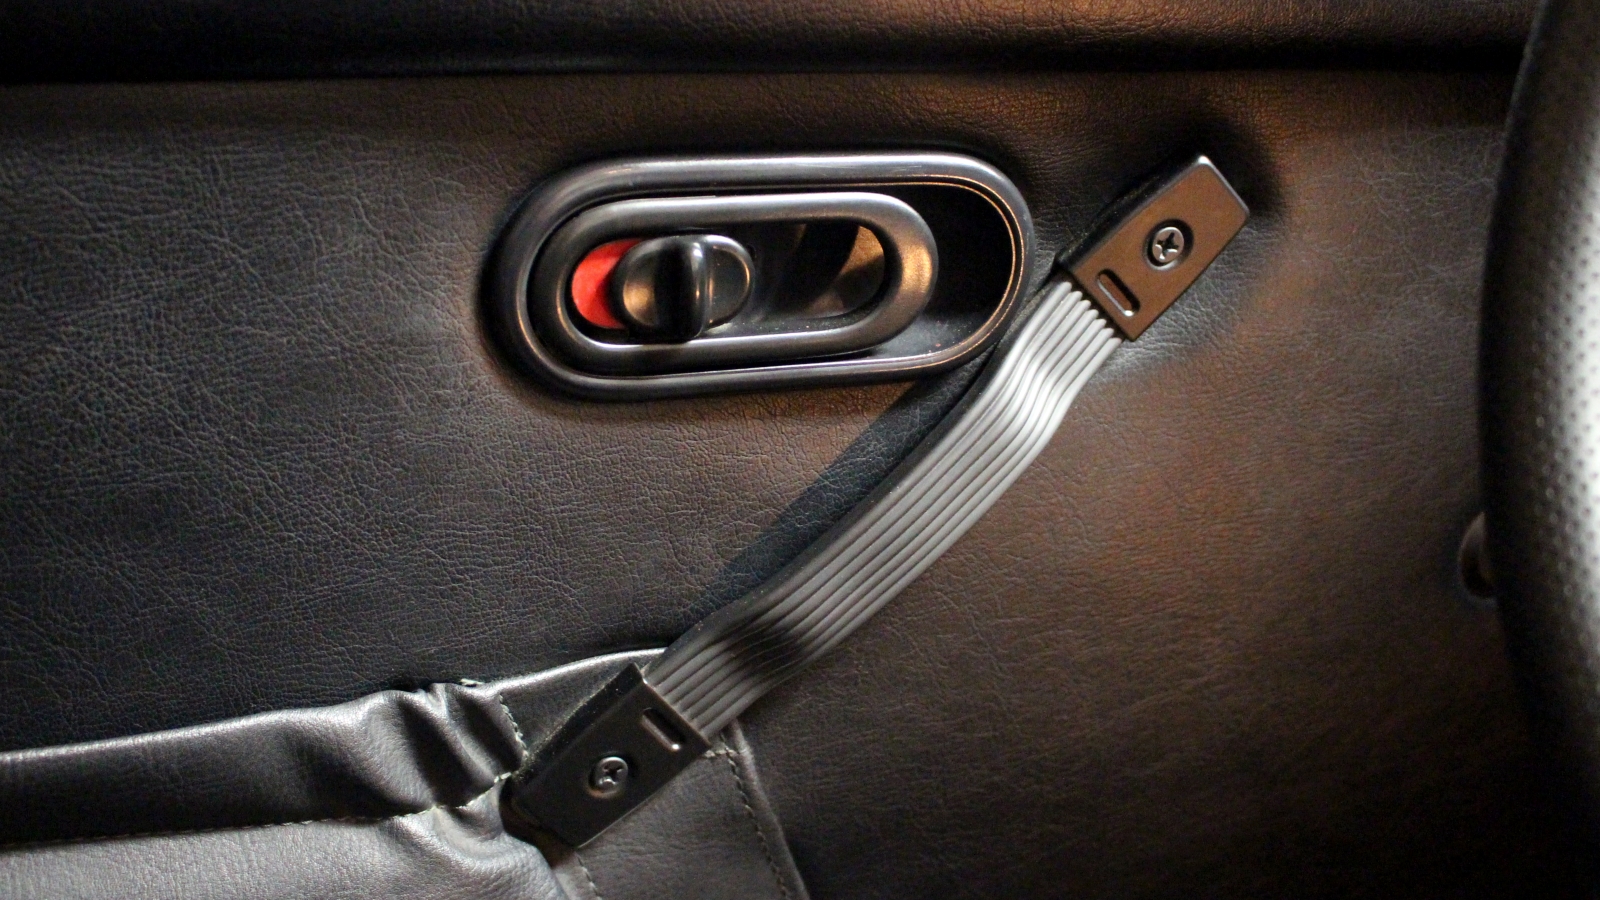 Miata Parts-Express door handle strap after 2 years